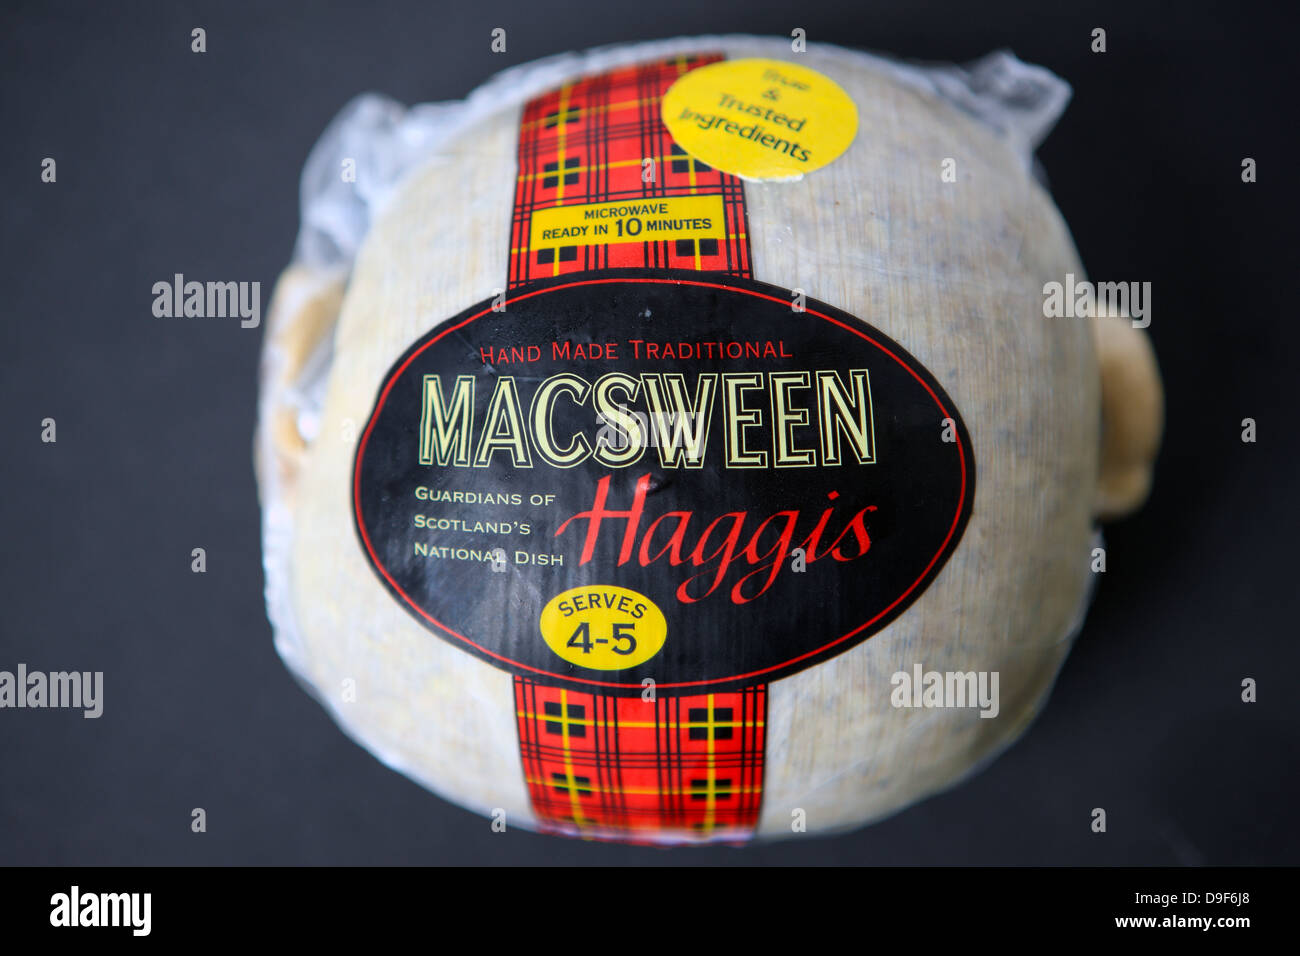 Haggis Scotland's national dish made by Macsween of Edinburgh Stock Photo